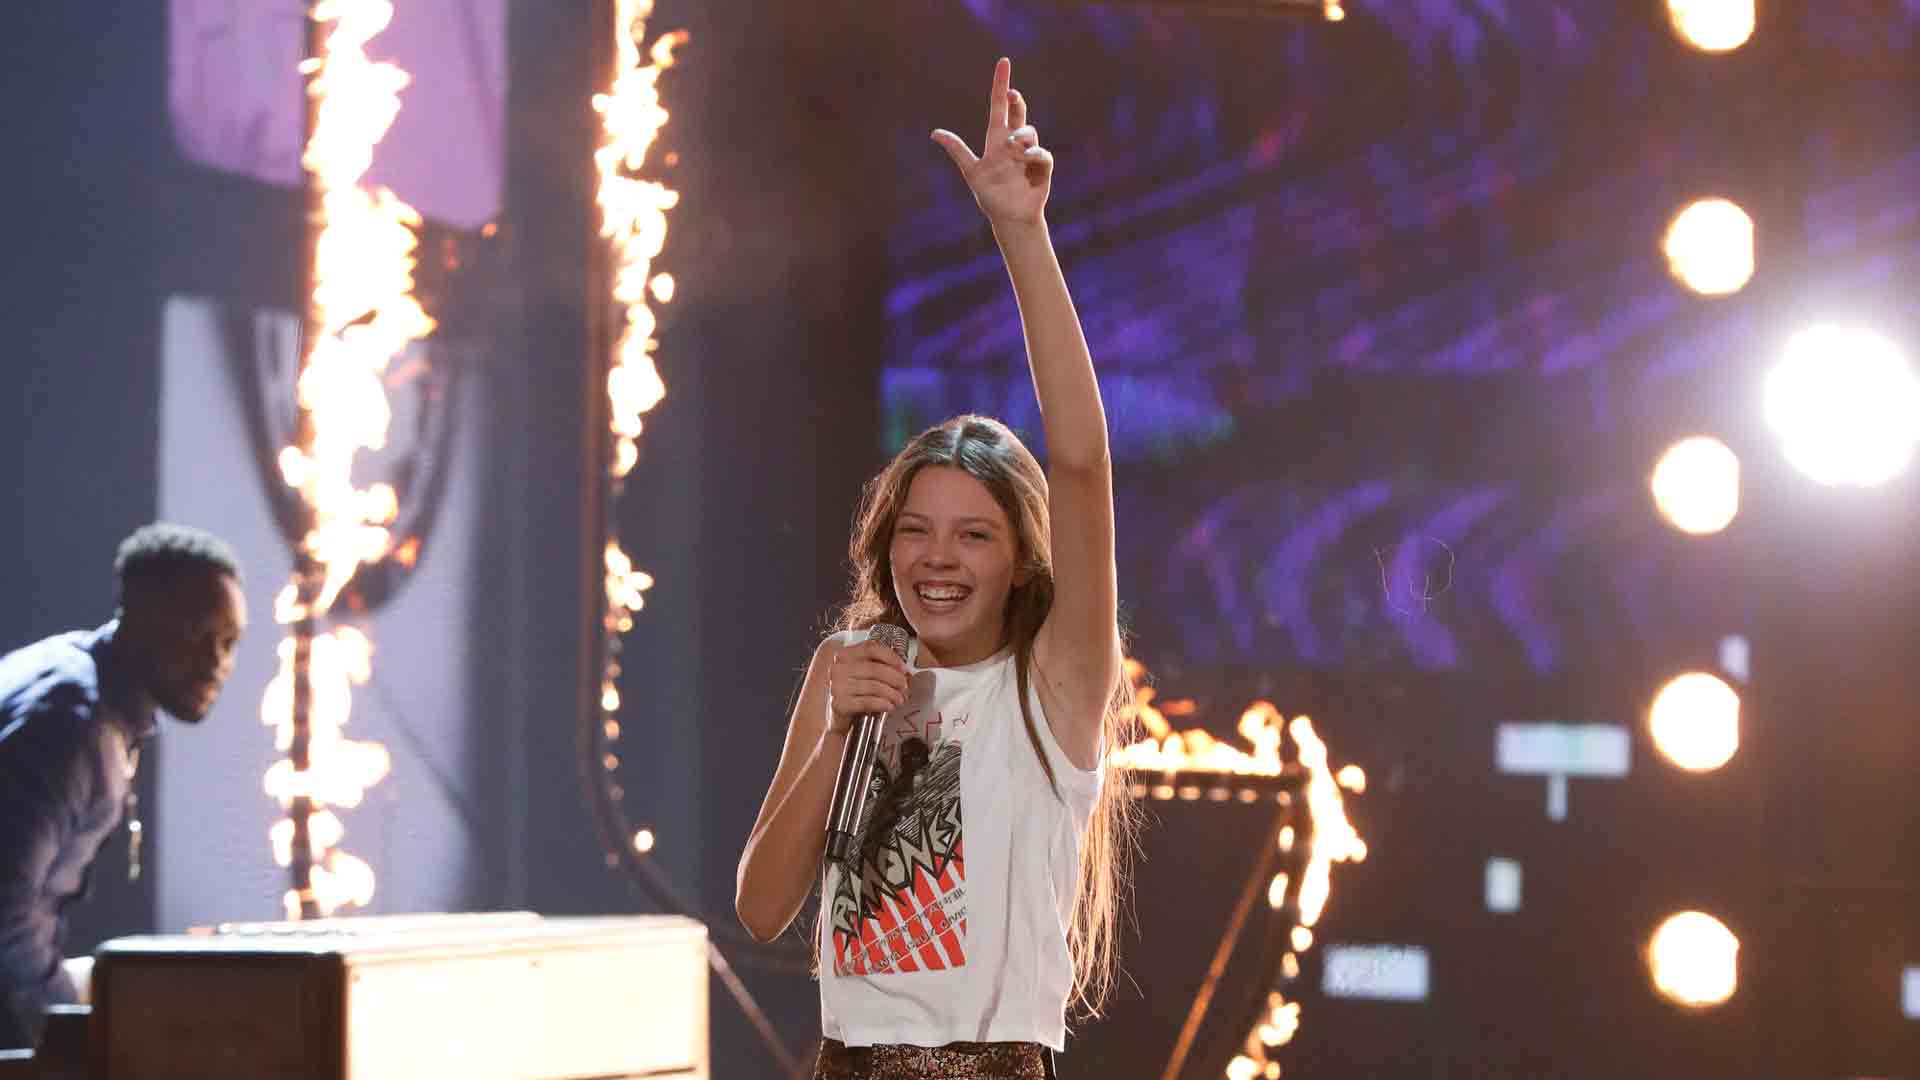 Watch America's Got Talent Highlight: Courtney Hadwin - The Live Show Finals - NBC.com1920 x 1080